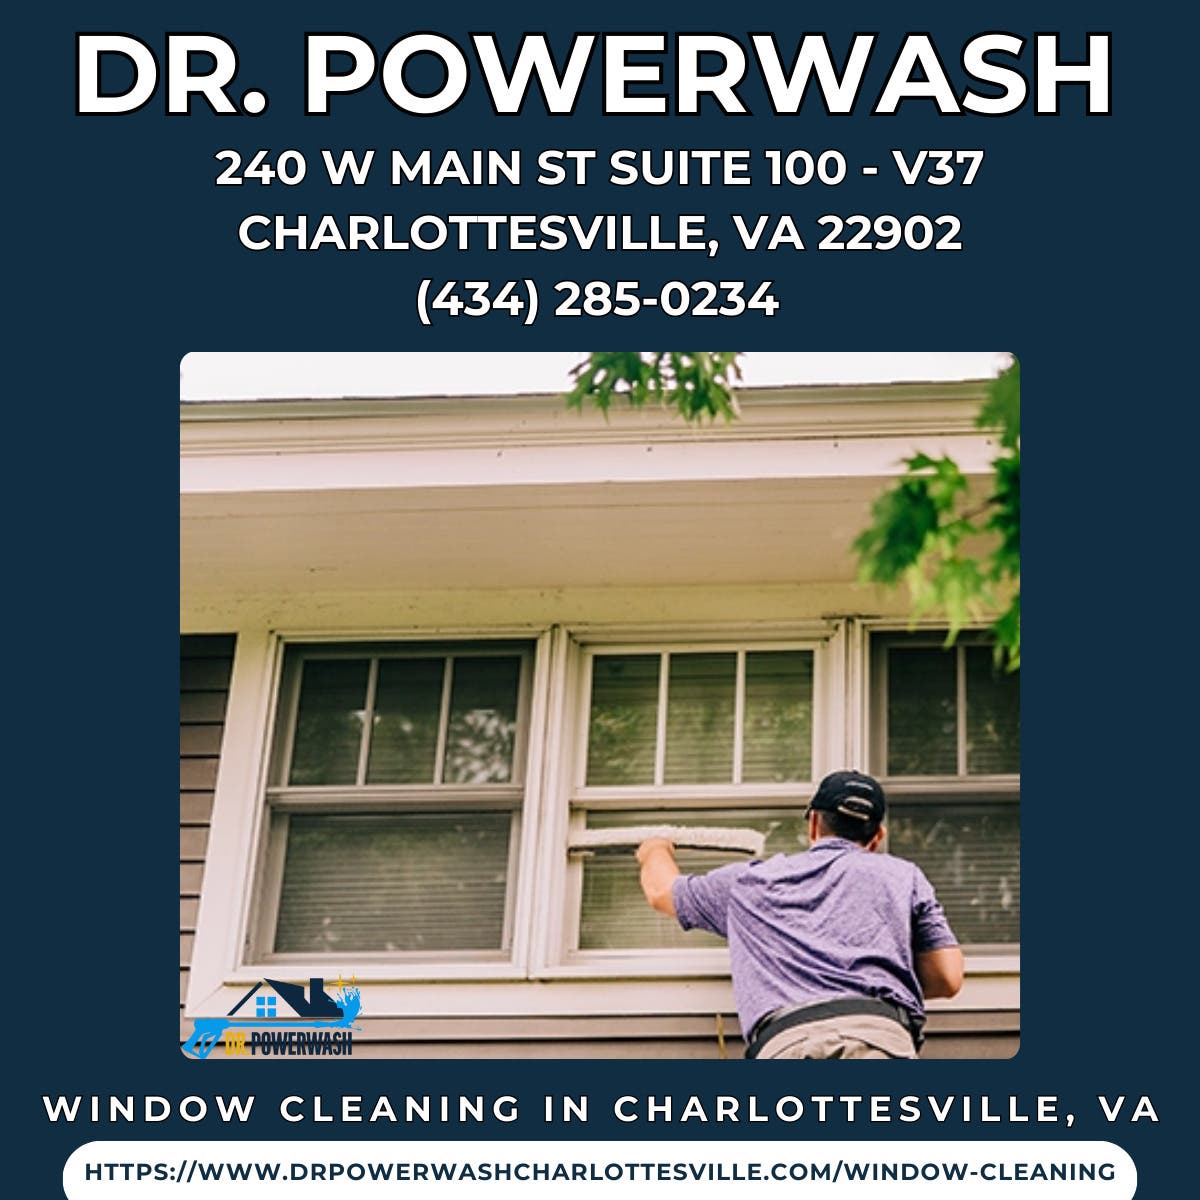 Window Cleaning in Charlottesville, VA - Dr. Powerwash.